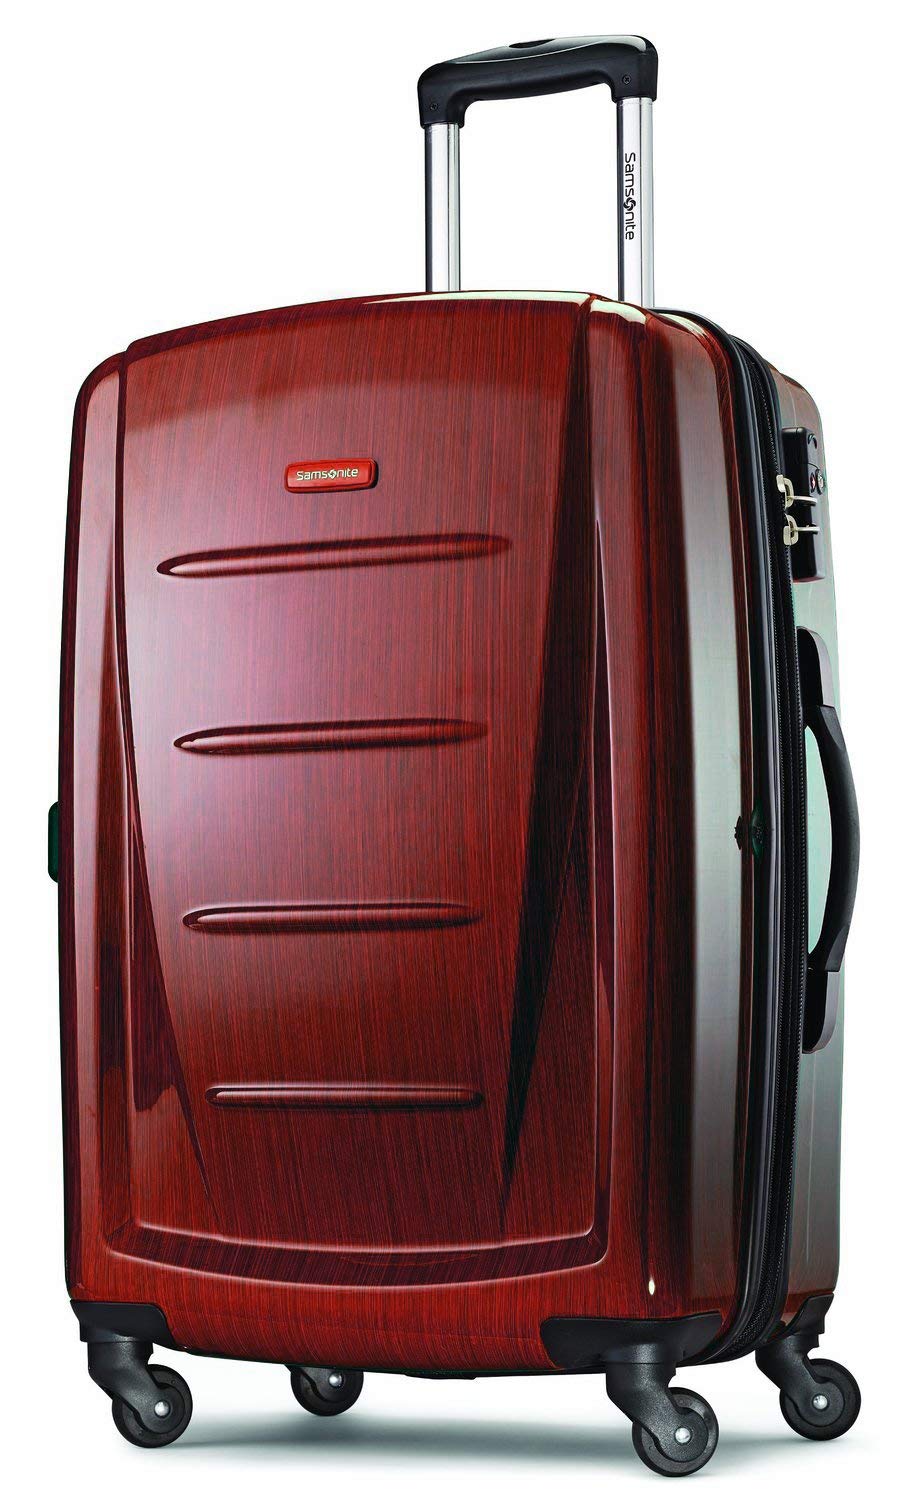 Samsonite Winfield 2 Hardside Luggage with Spinner Wheels U5